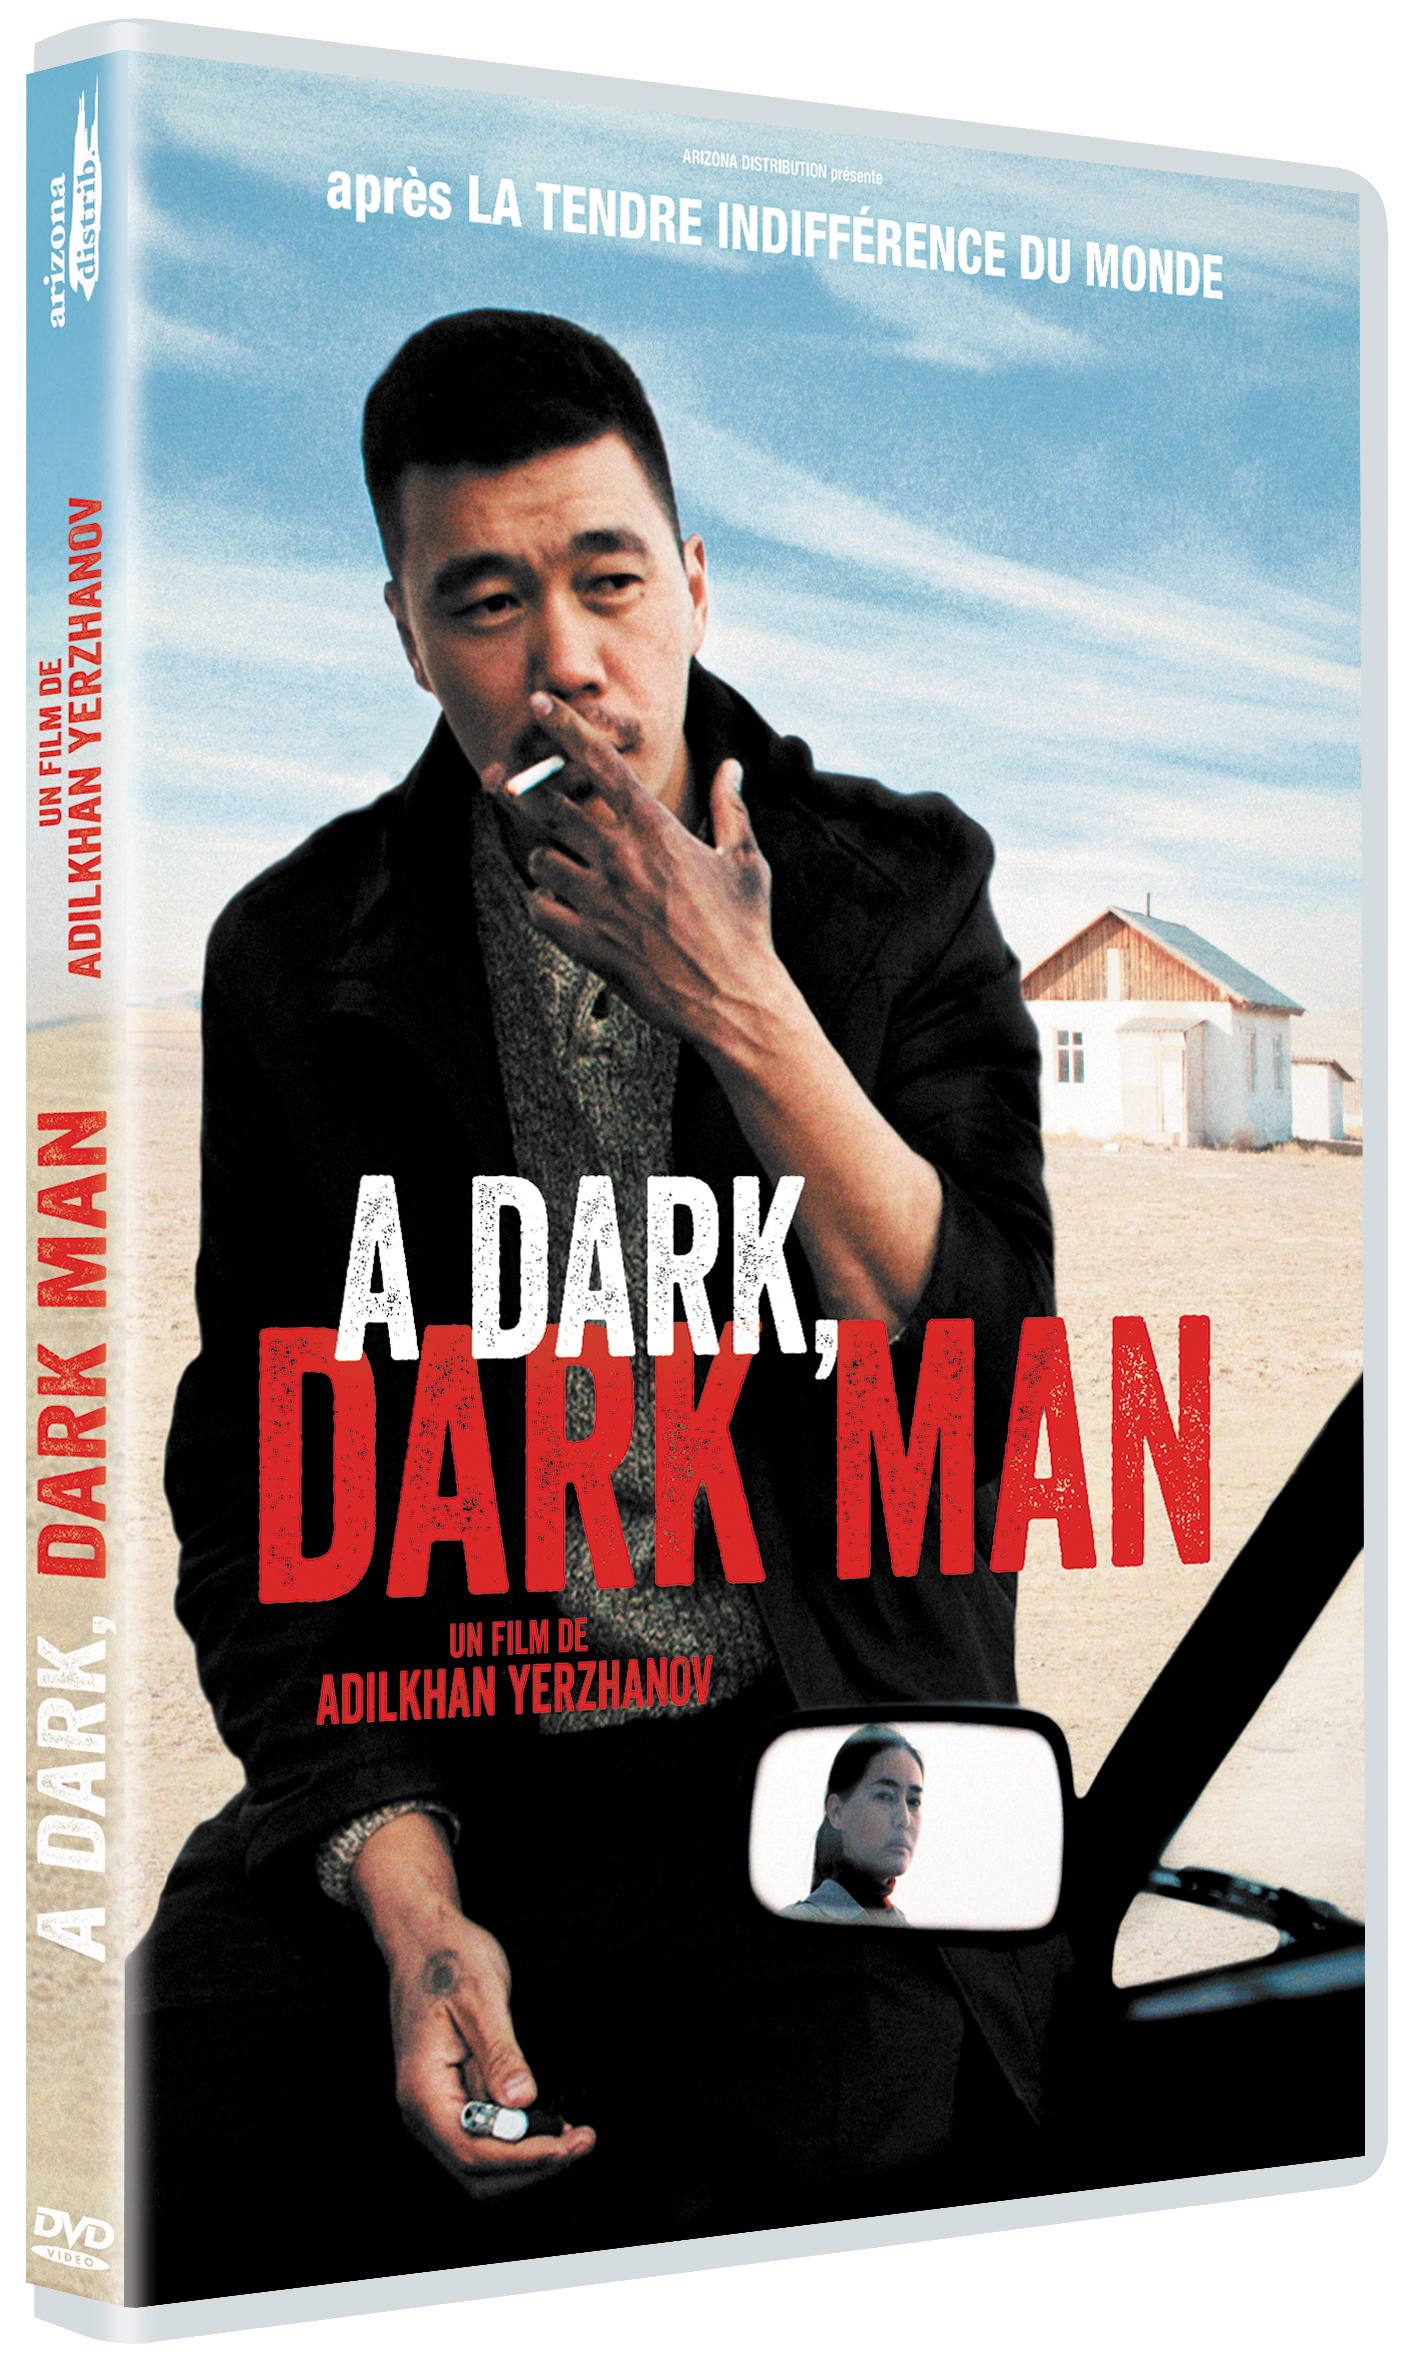 A dark, dark man / Adilkhan Yerzhanov, réal. | Yerzhanov, Adilkhan. Réalisateur. Scénariste